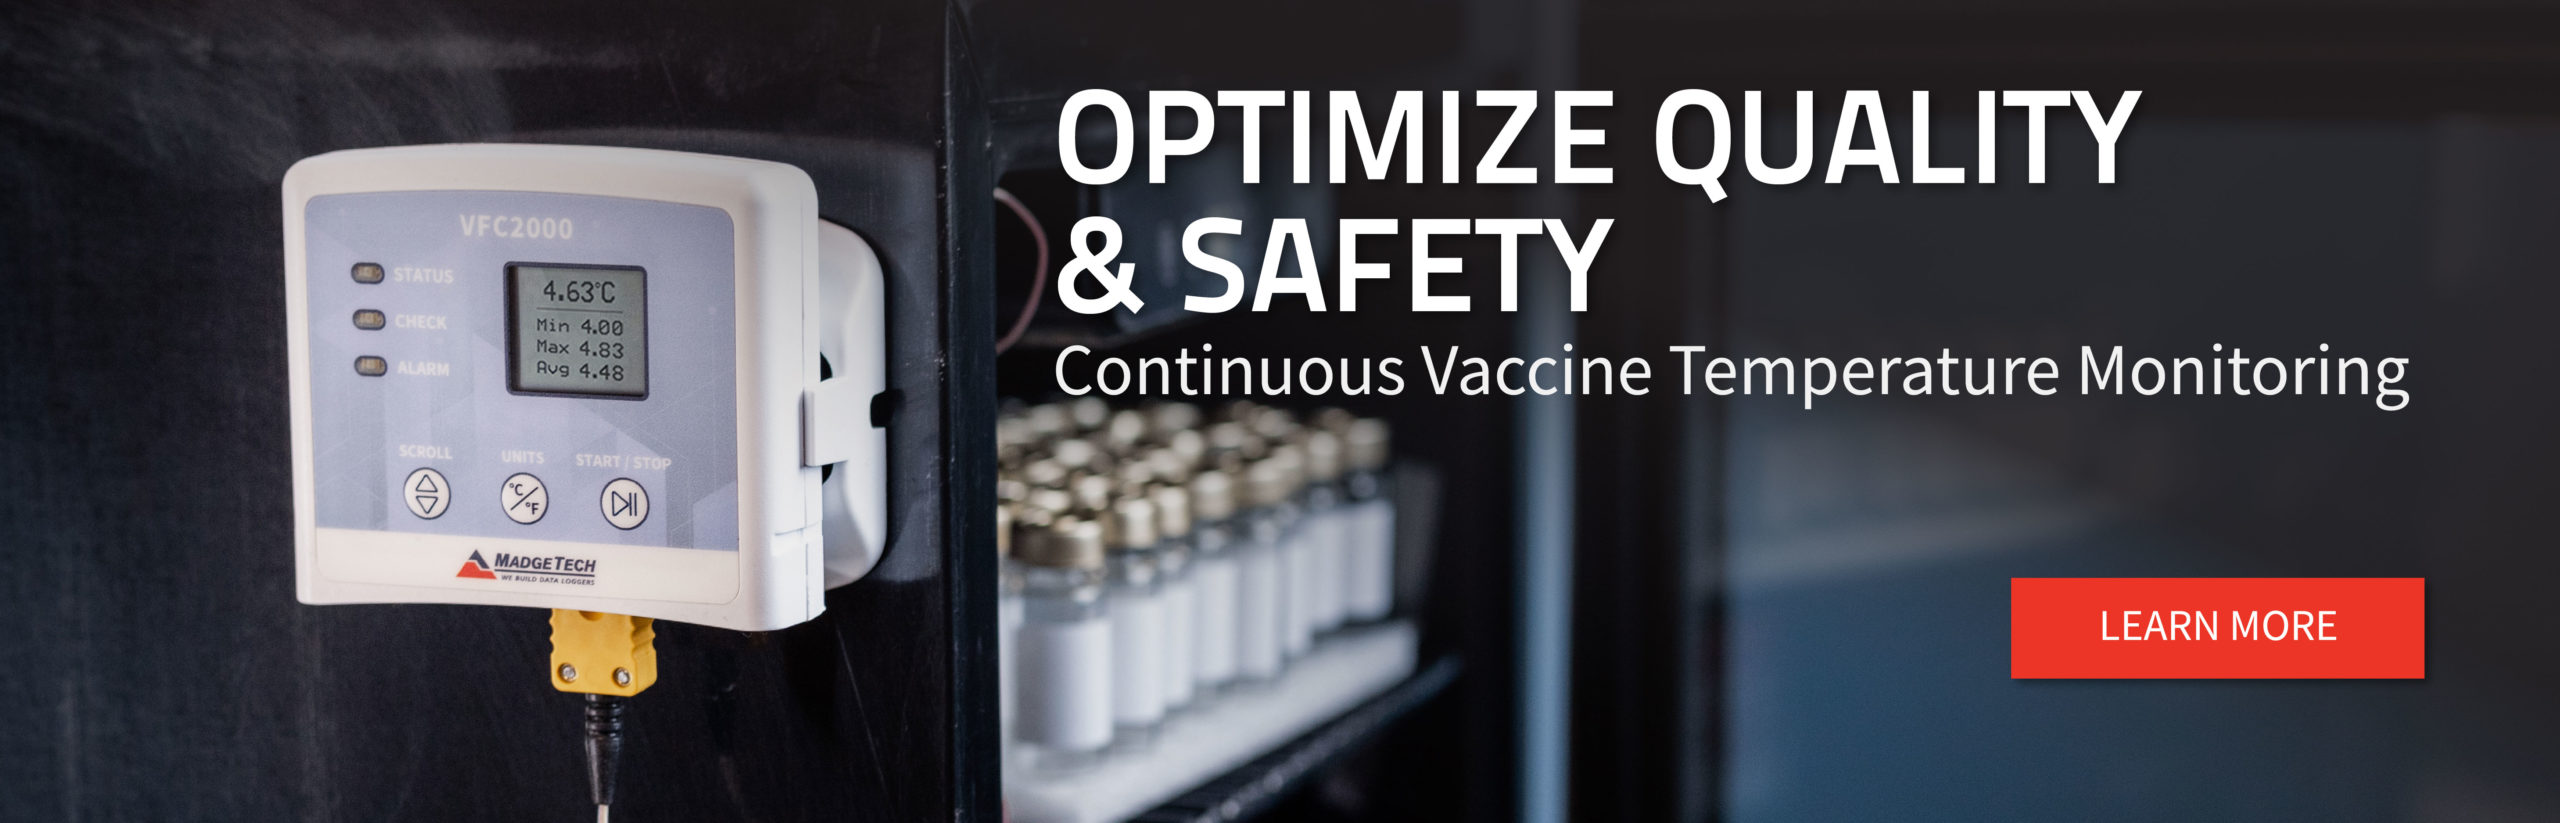 Vaccine Monitoring VFC-01